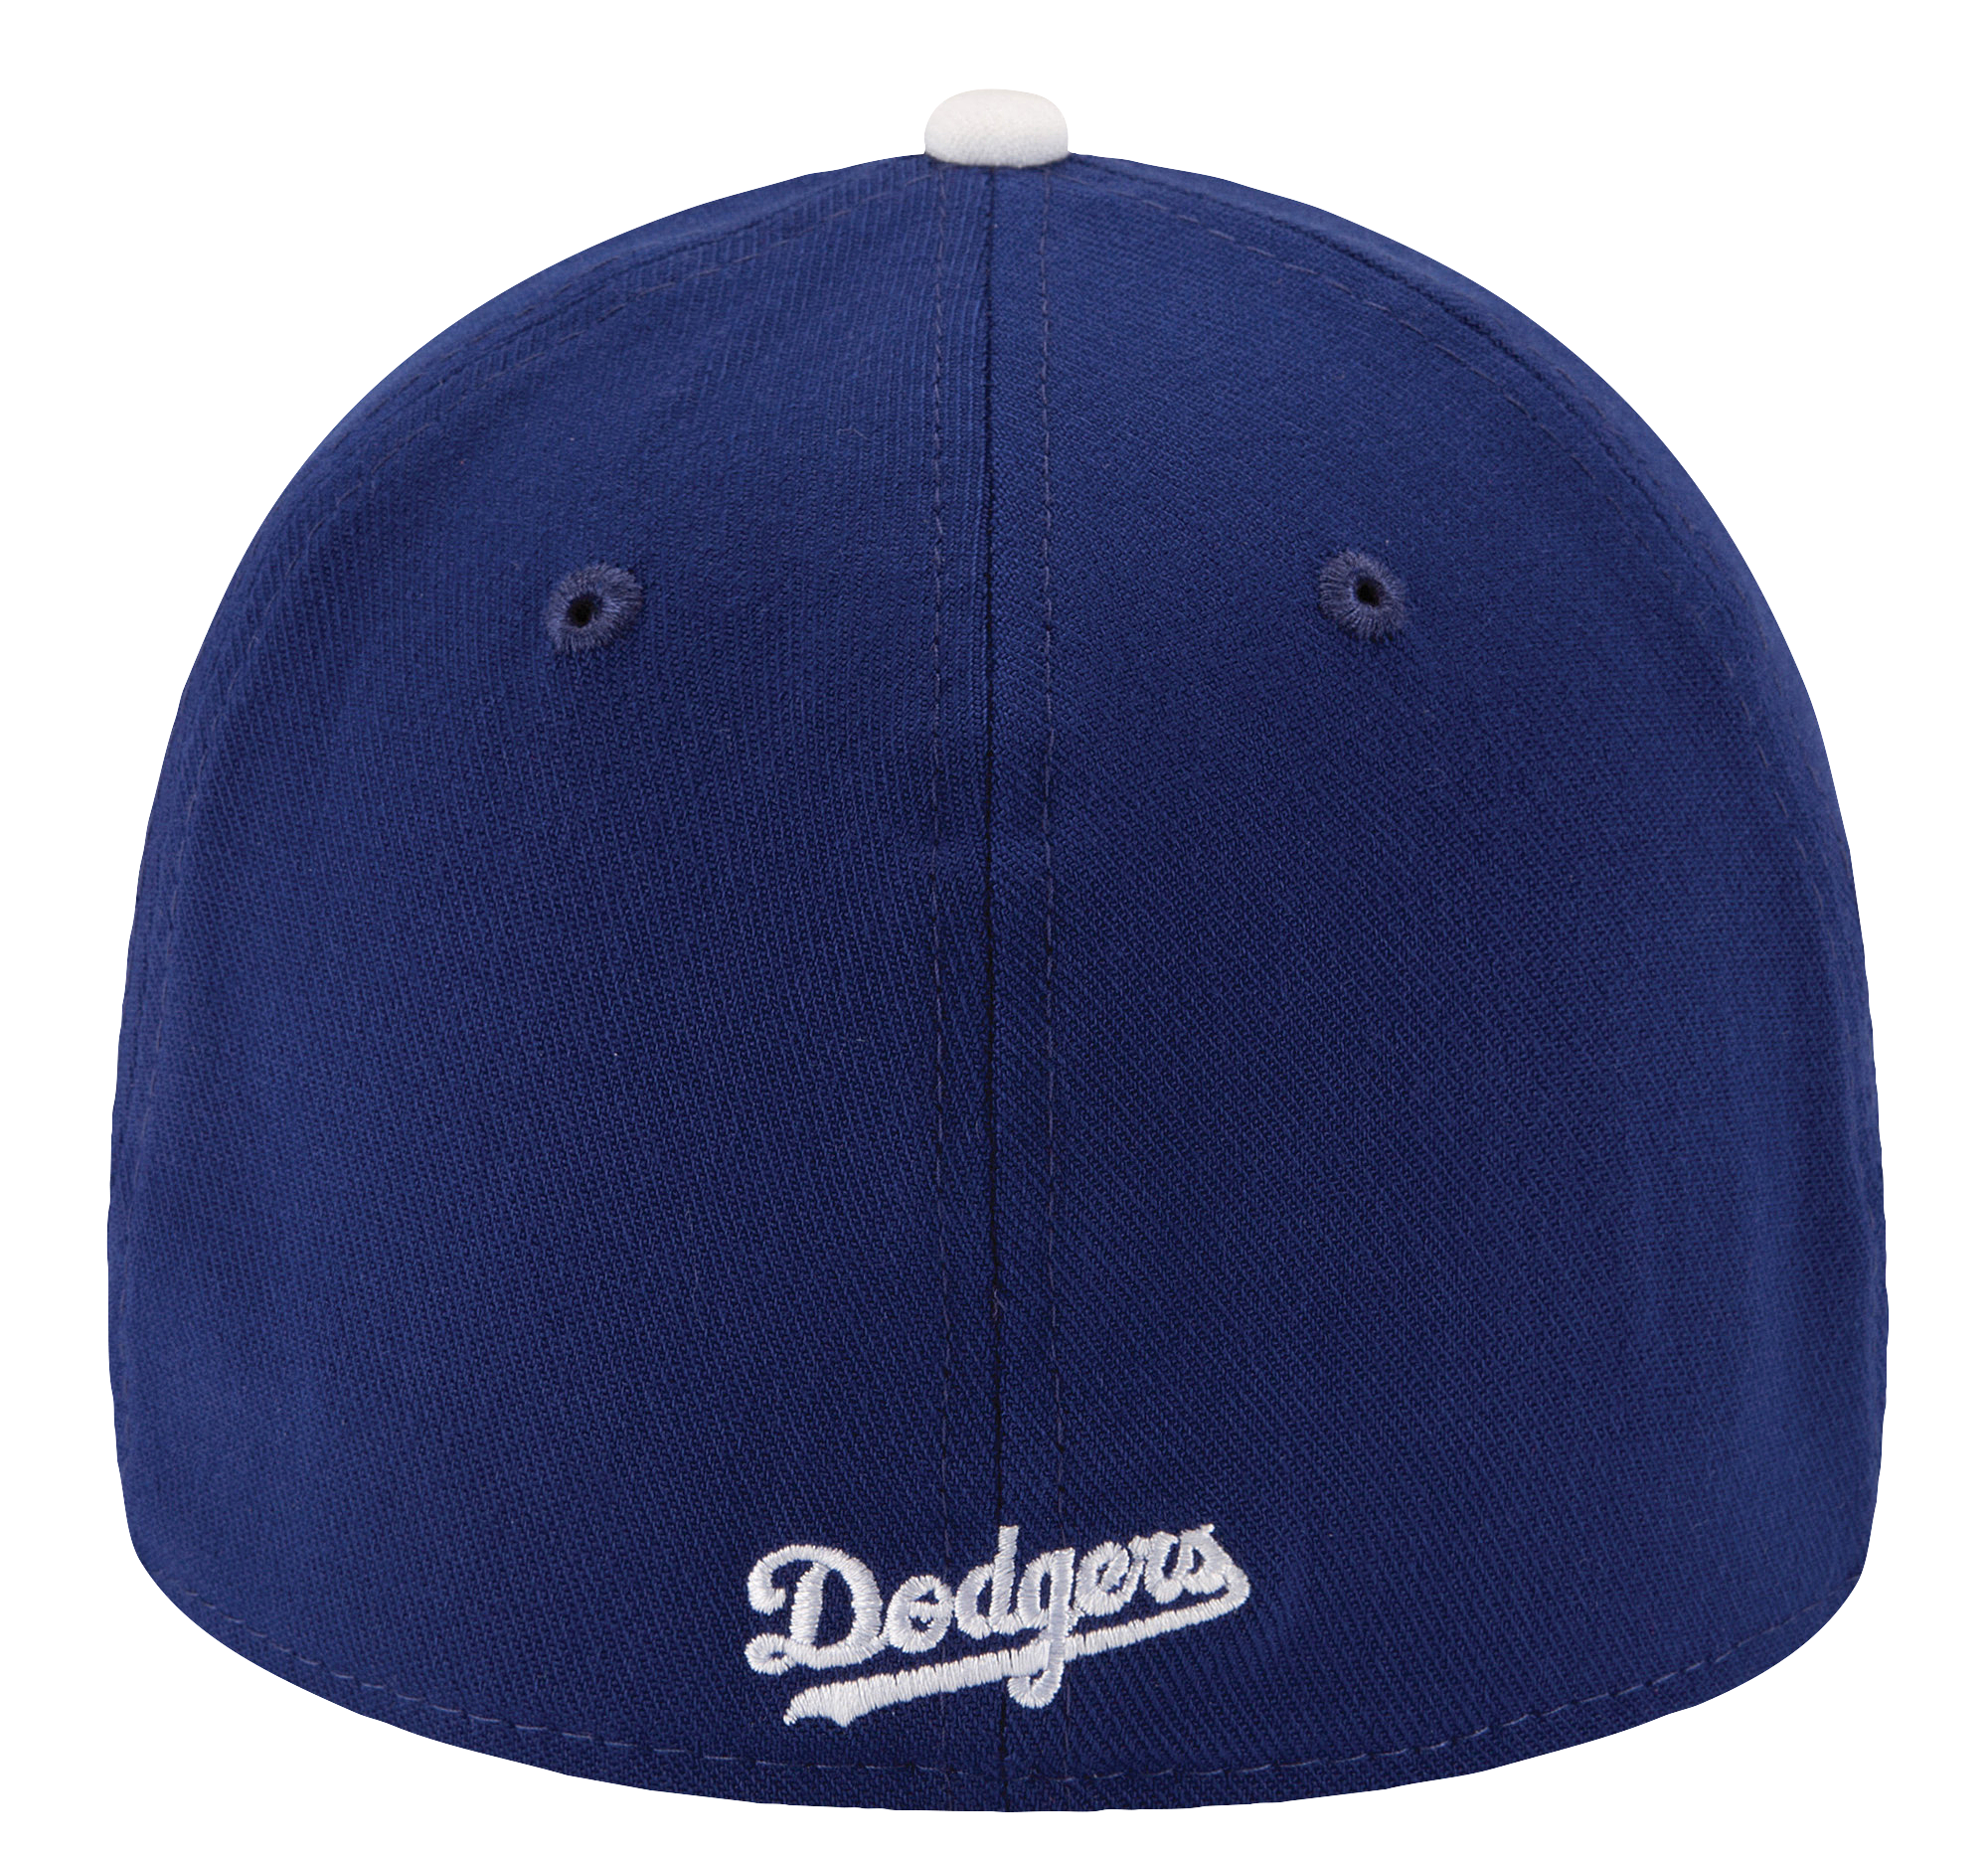 New Era Dodgers 39Thirty Classic Cap